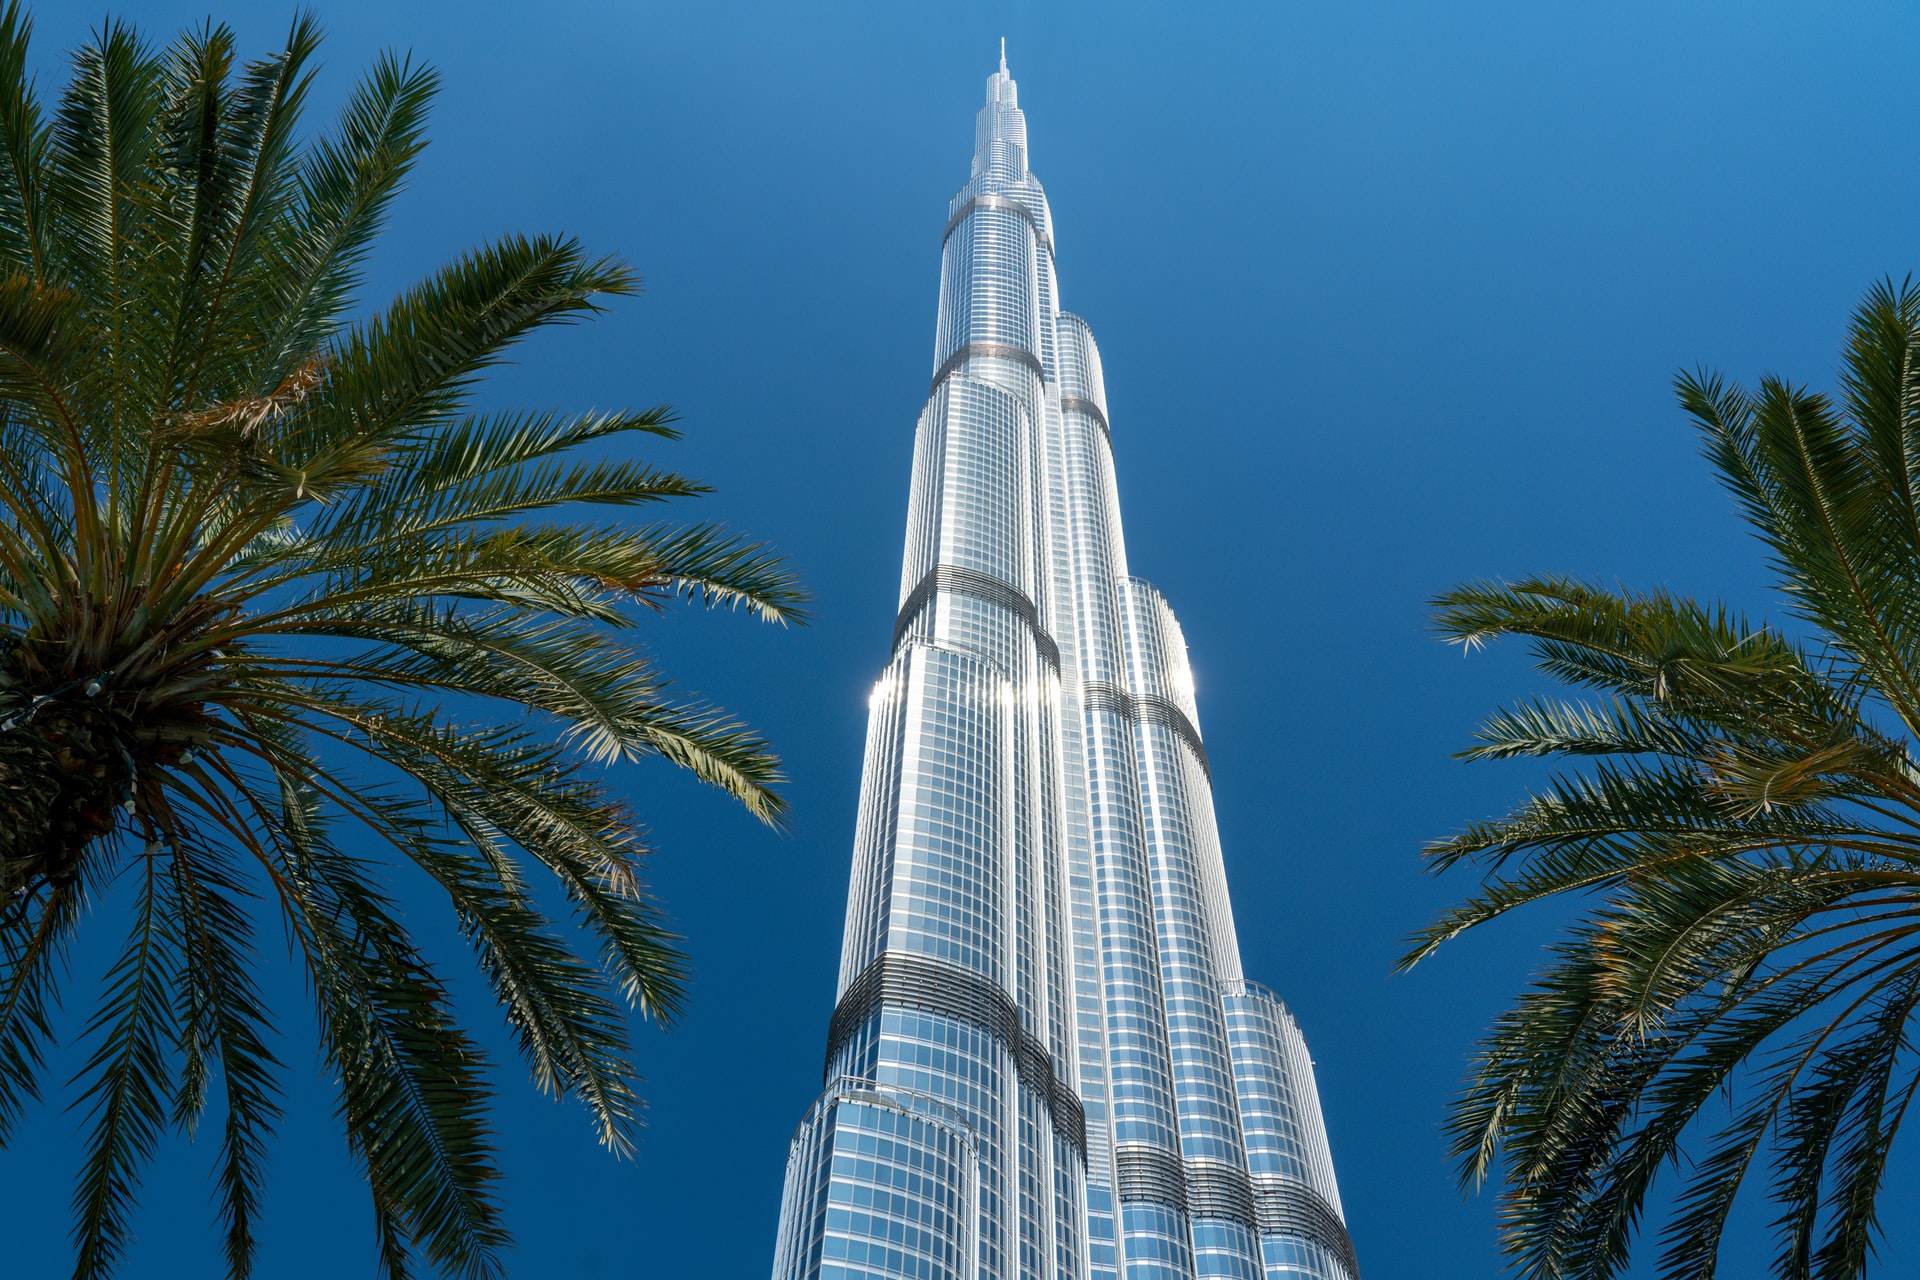 Private full day tour of Dubai with visit to the Burj Khalifa